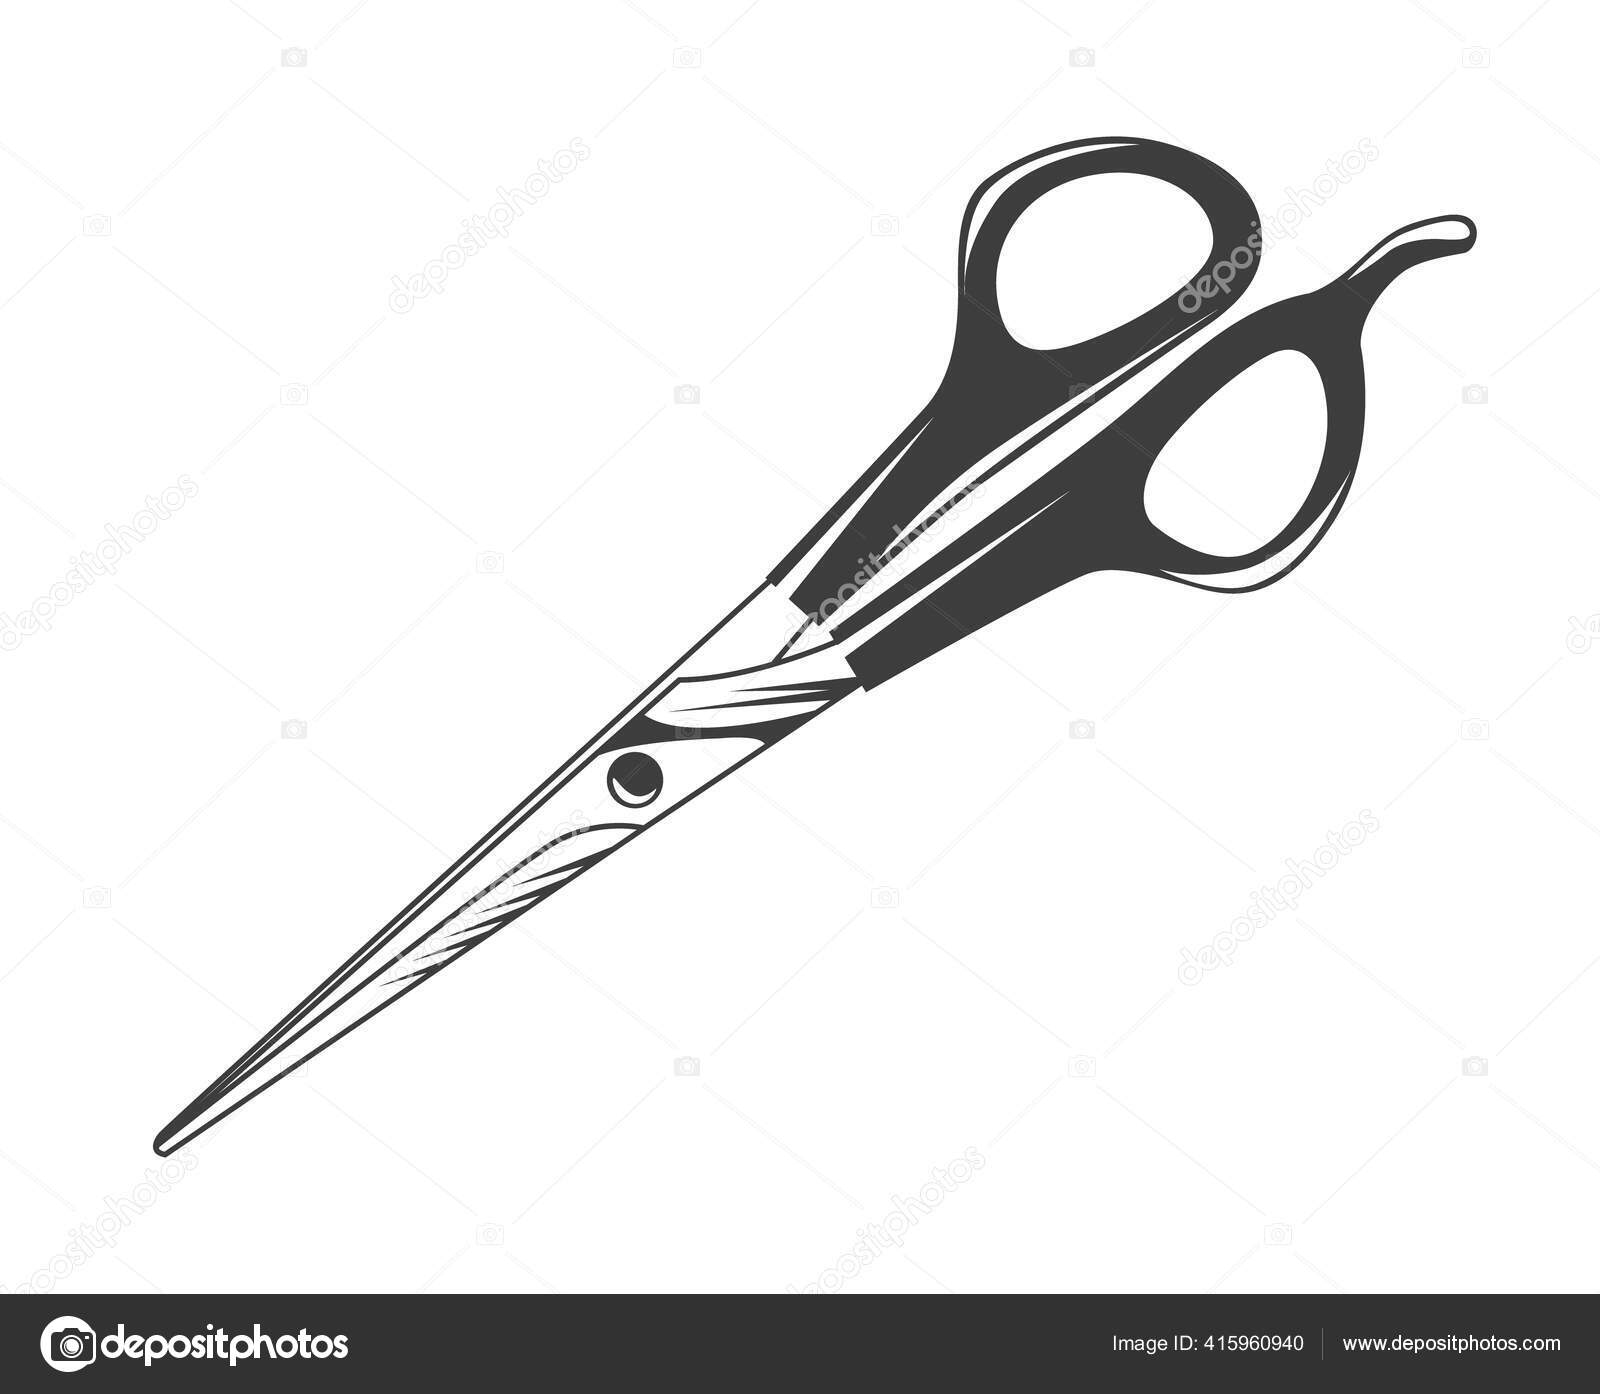 Sclssors, cut, cutter, cutting, hair, scissor, scissors icon - Free download